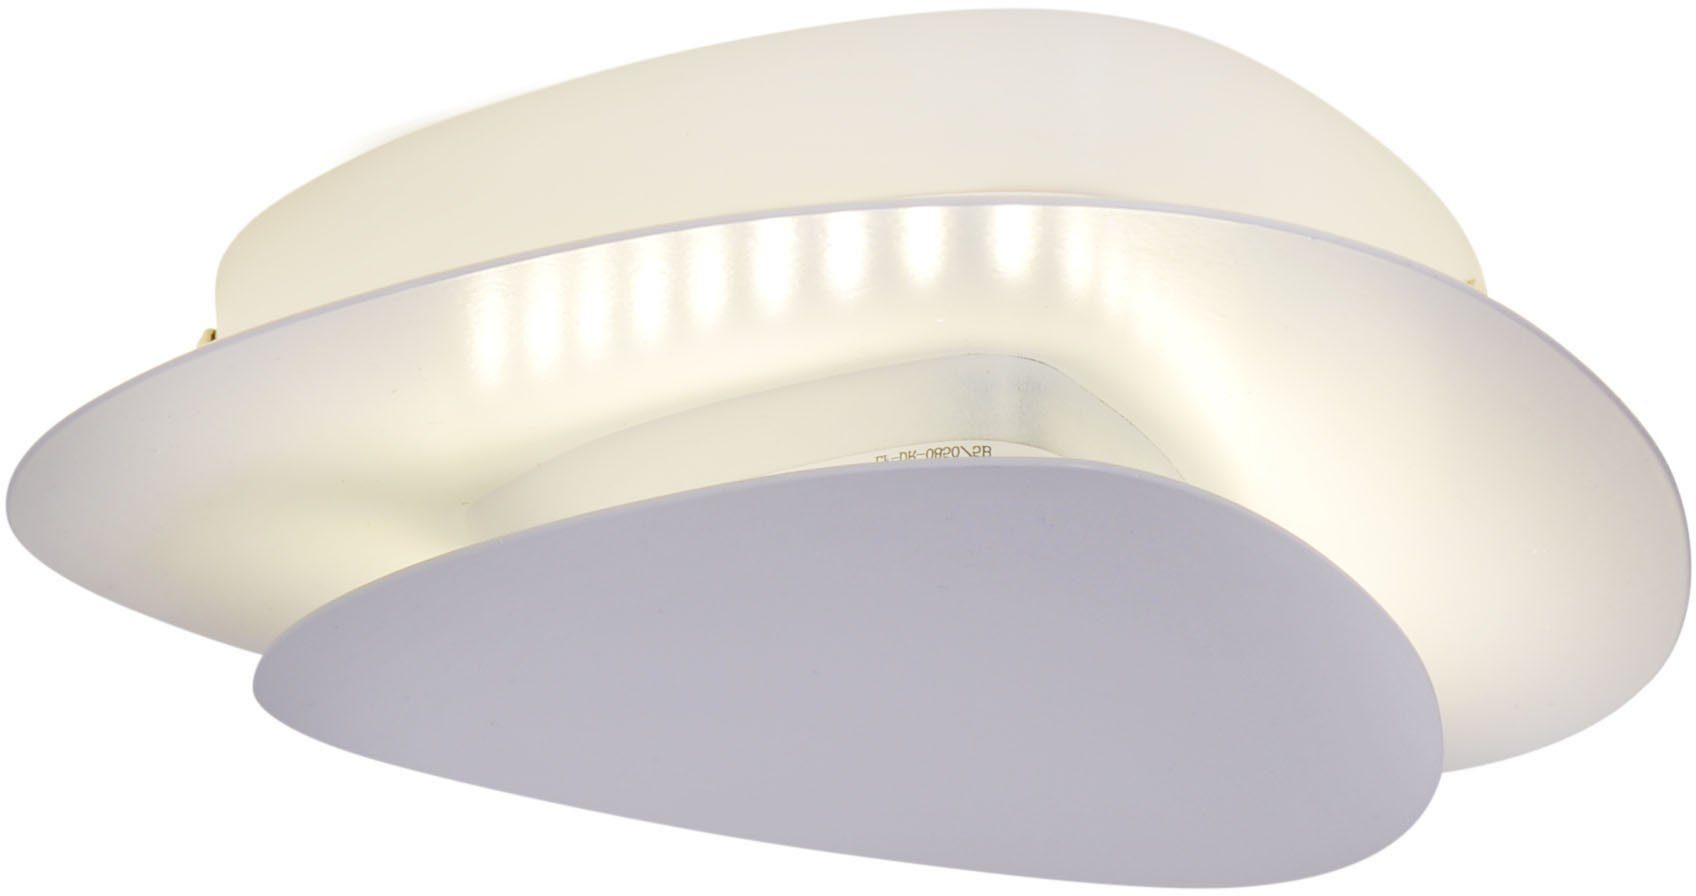 Material: LED Warmweiß, näve Farbe: LED G, integriert, weiß Deckenleuchte Metall, Liso, Treiber, incl. fest Energieeffizienzklasse